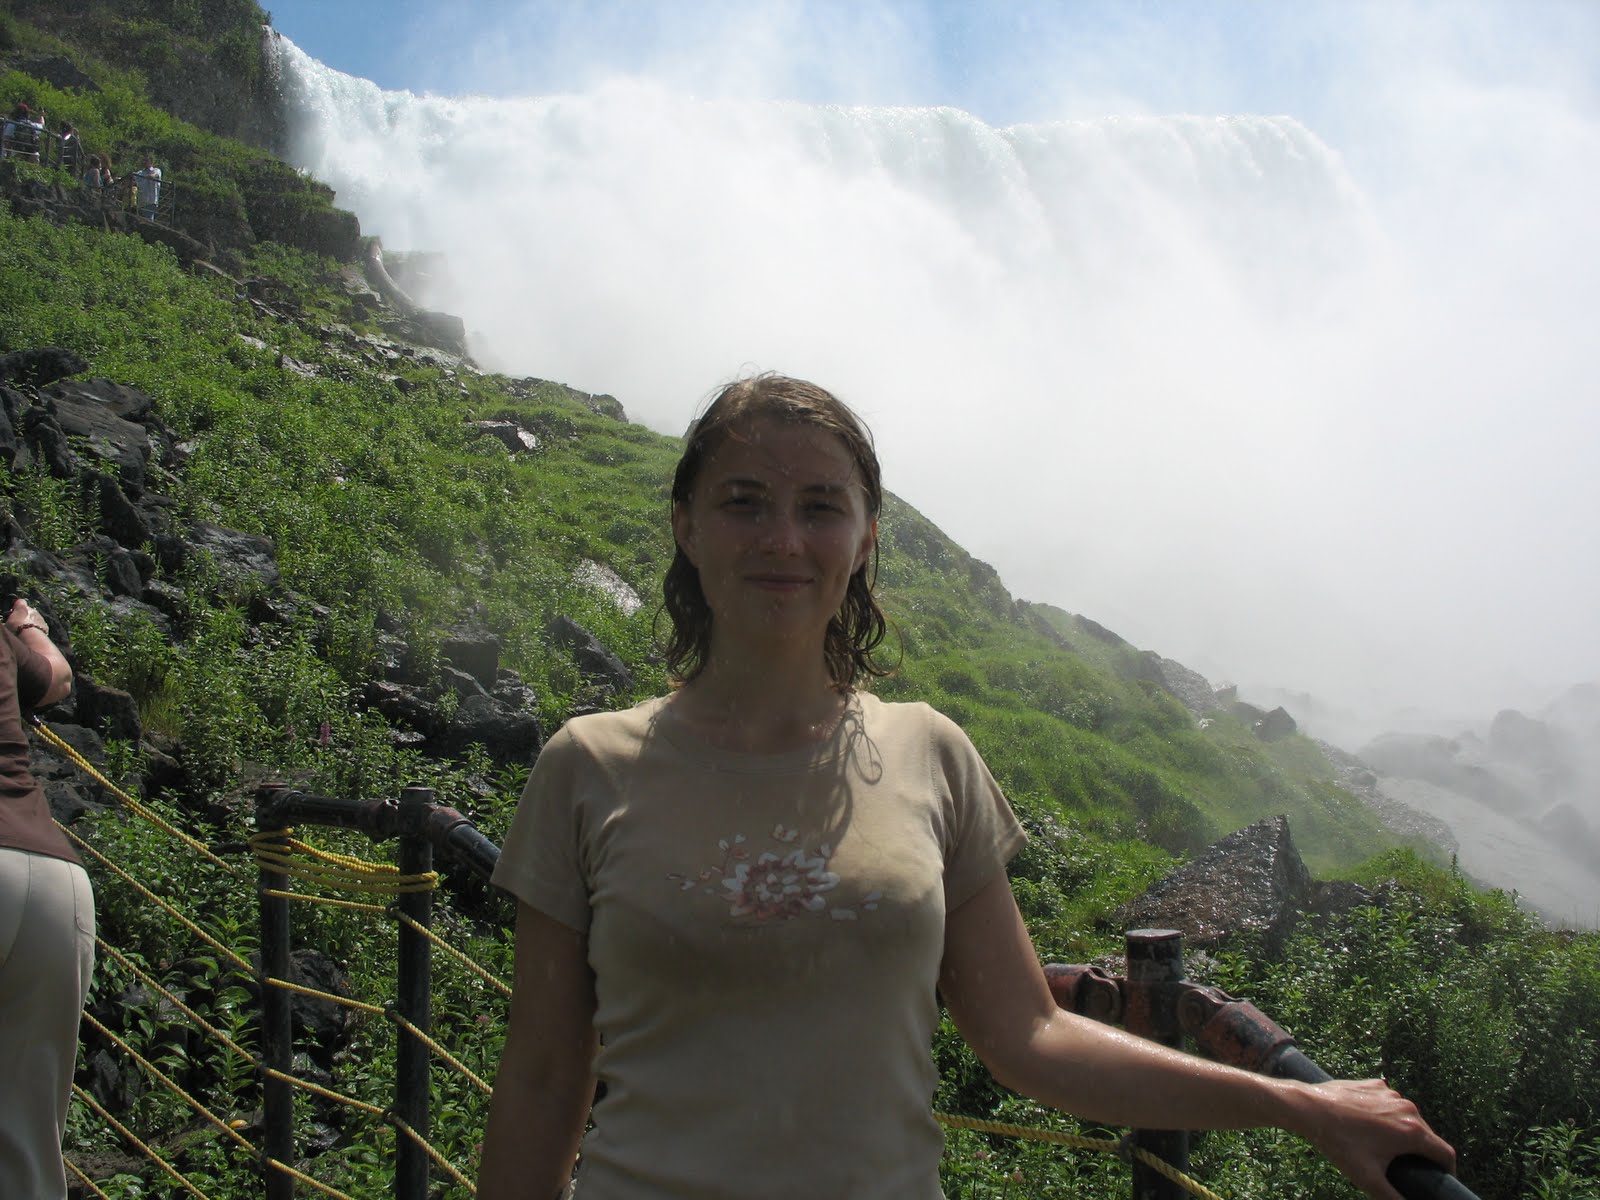 Niagarskiй waterfall